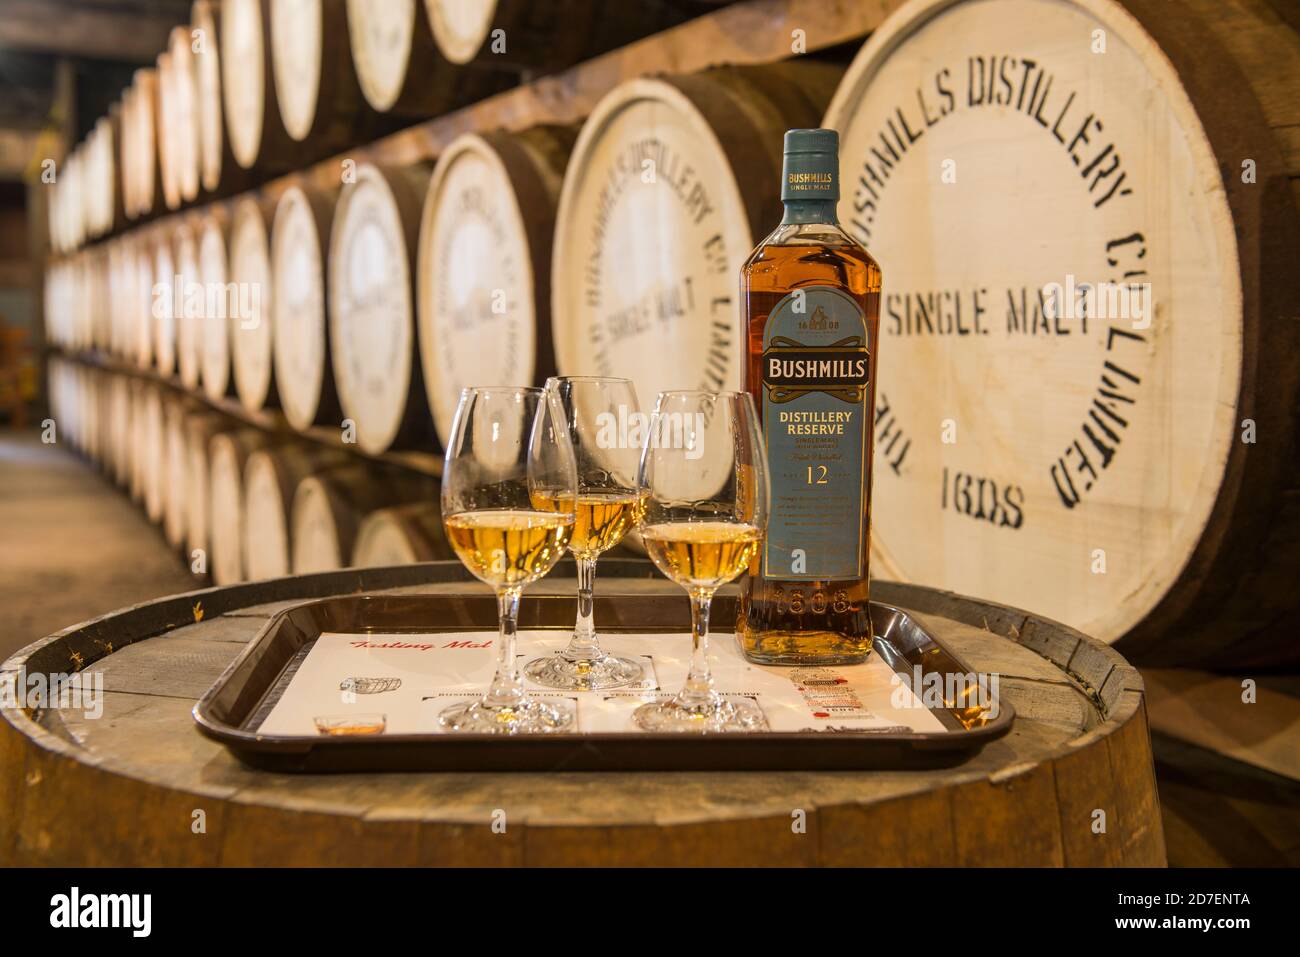 Bushmills whisky produced at a distillery in Bushmills, County Antrim, Northern Ireland, U.K. Stock Photo